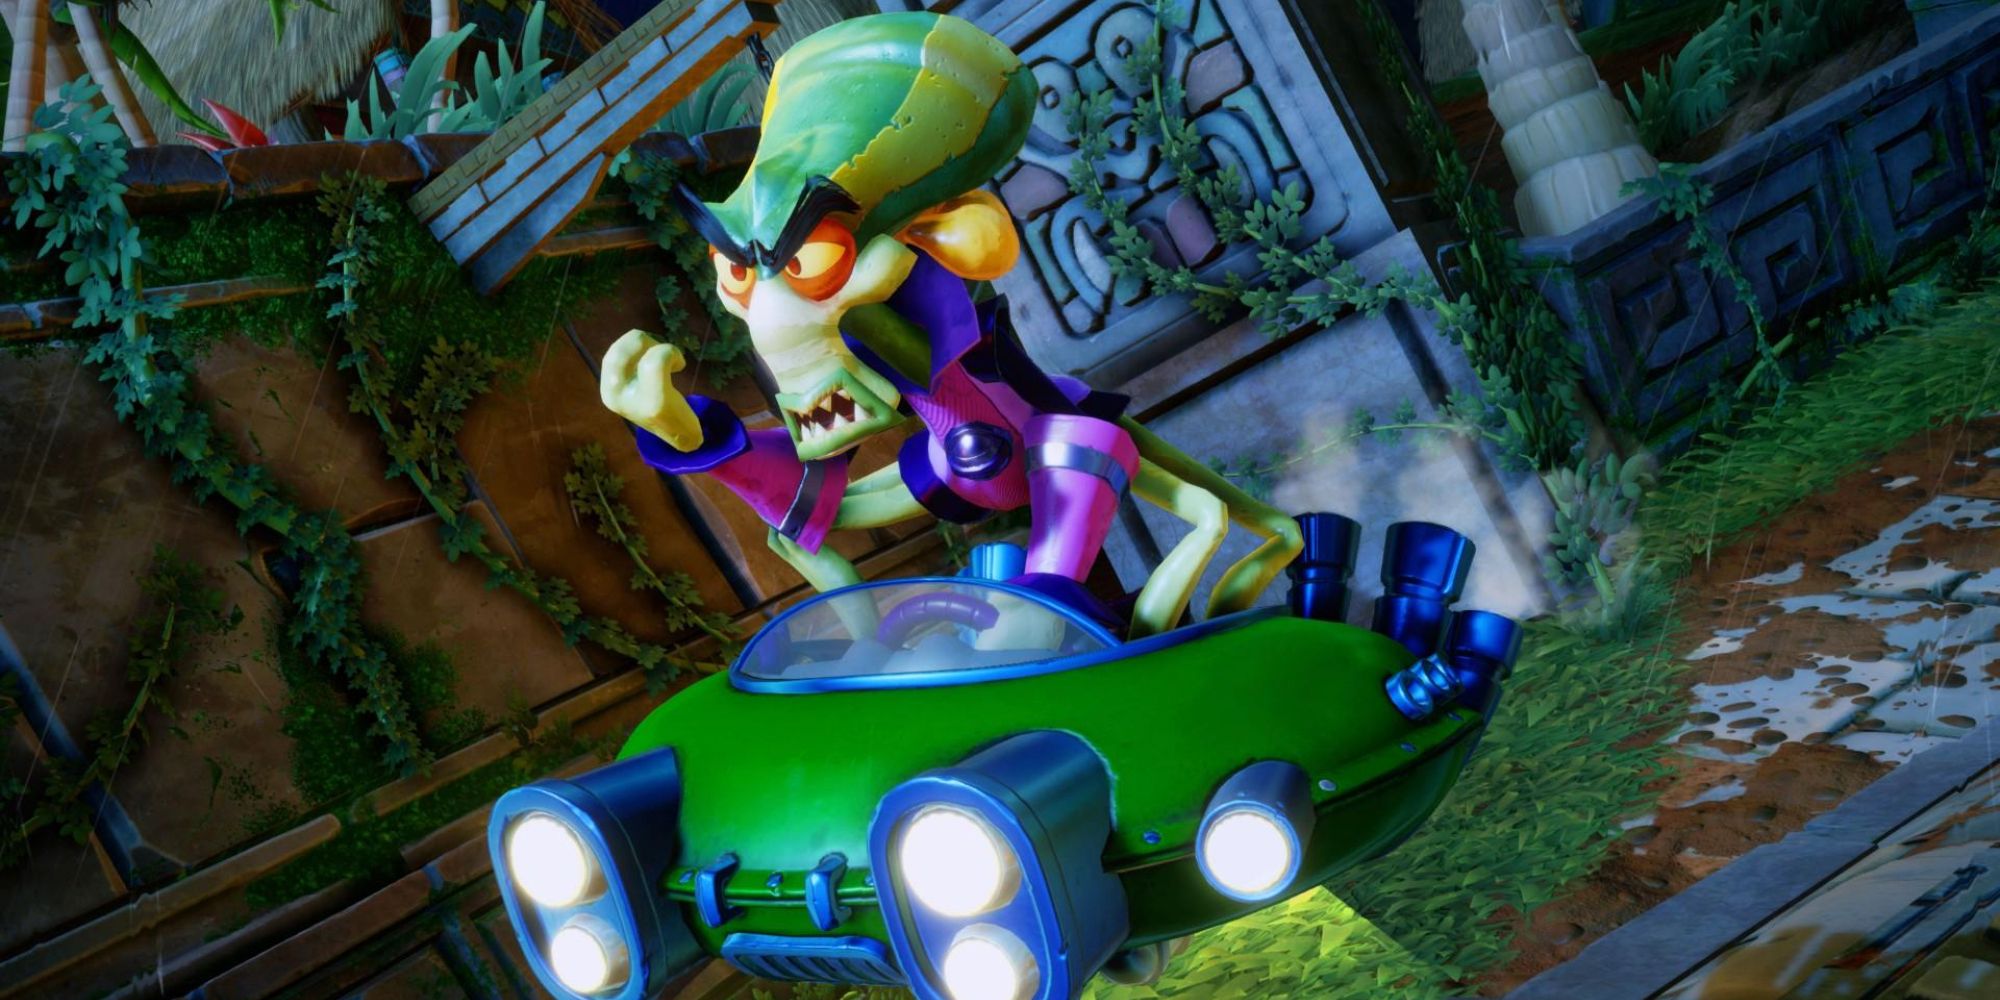 Nitros Oxide from the Crash Bandicoot series driving a green car